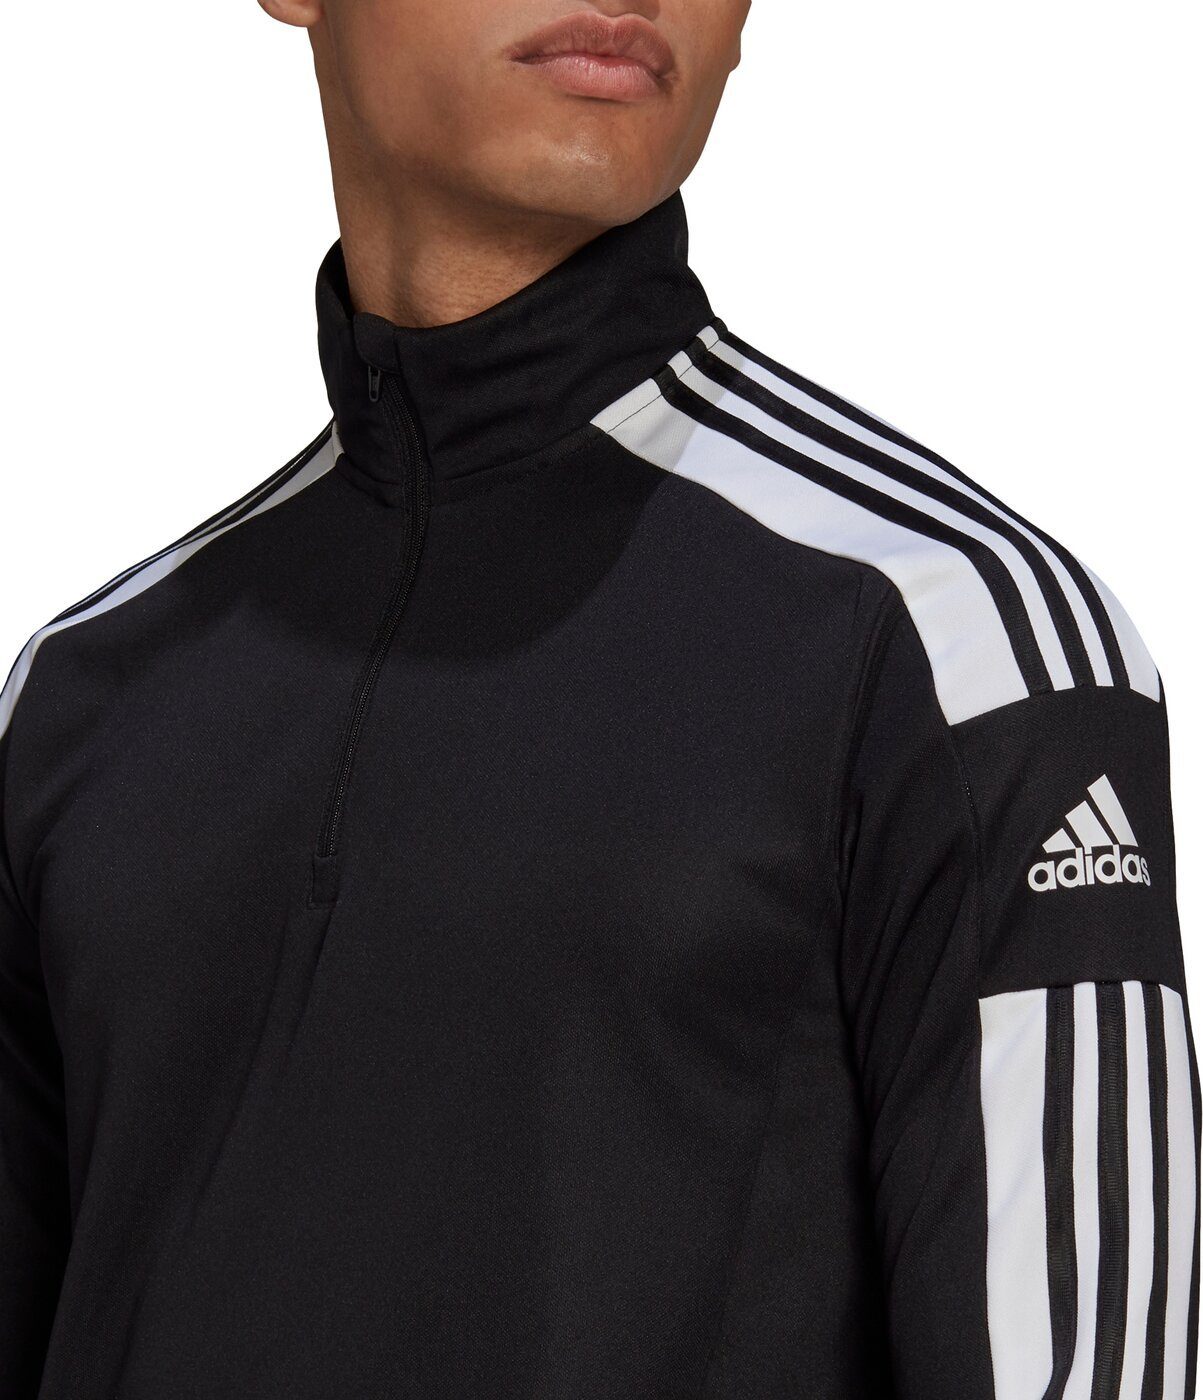 TOP BLACK/WHITE schwarzweiss adidas TR Sportswear Trainingsshirt Performance adidas SQ21